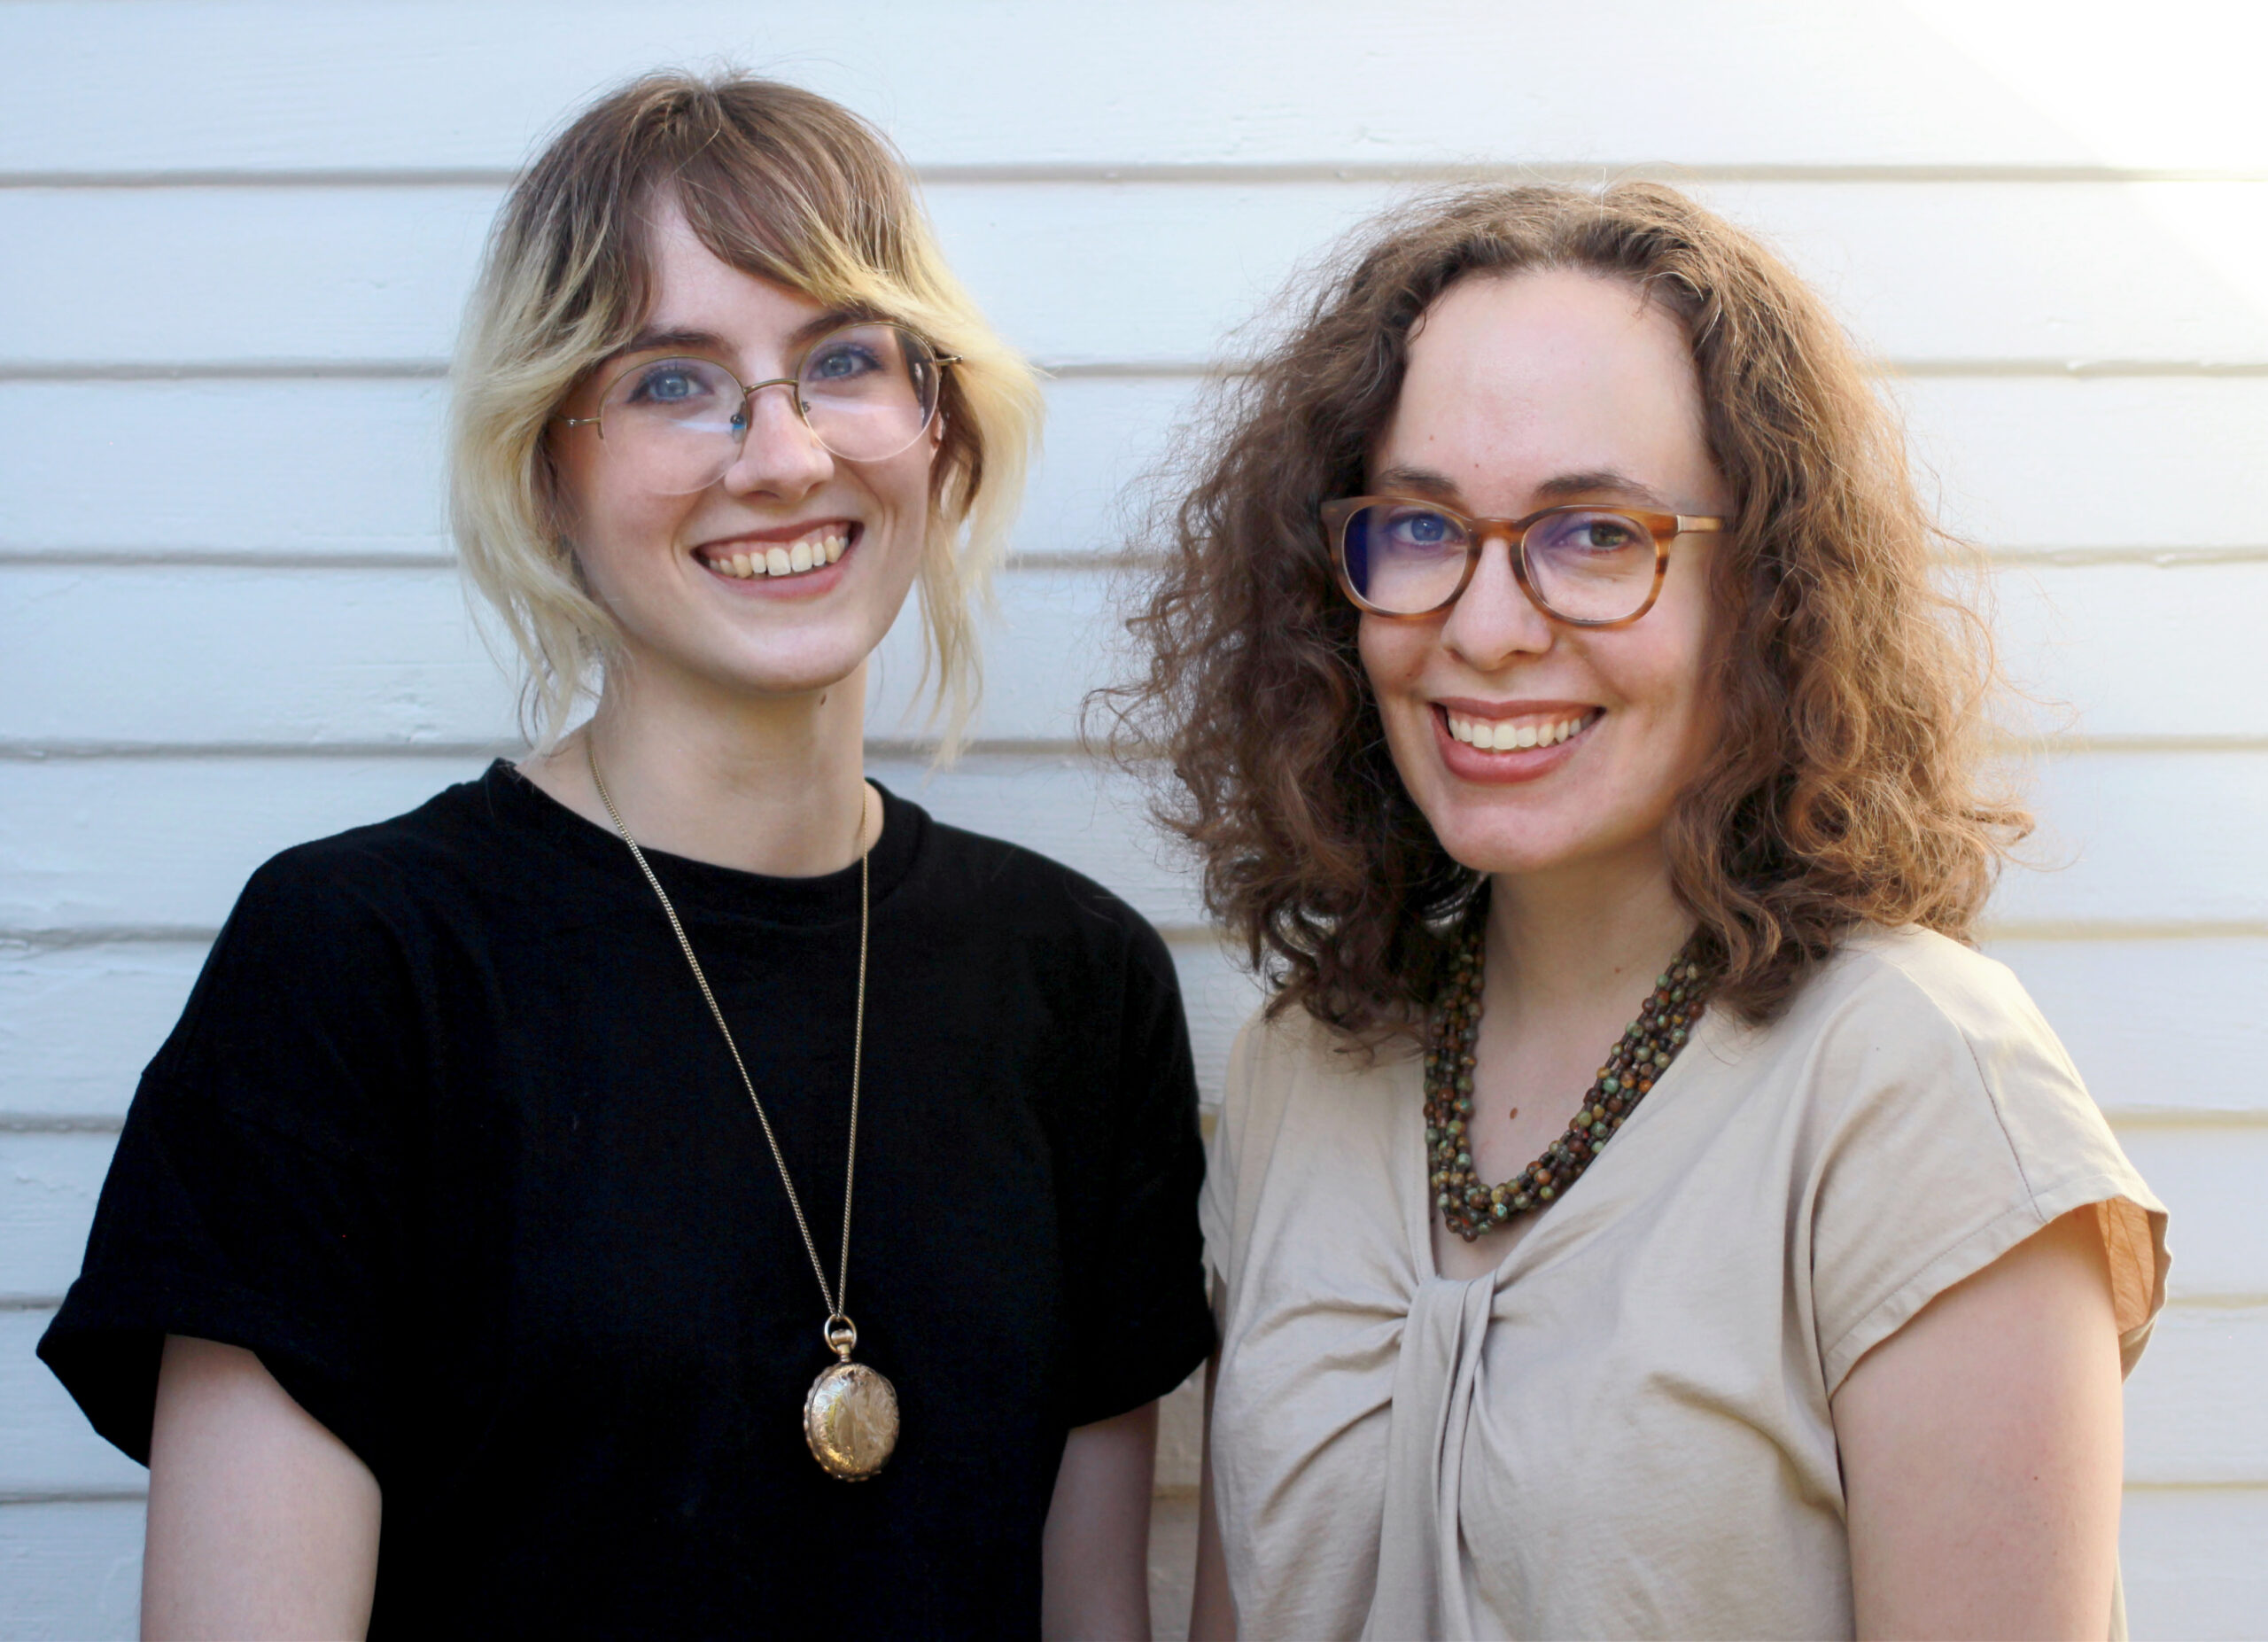 Interview with Meghan Boehman and Rachael Briner, creators of Dear Rosie